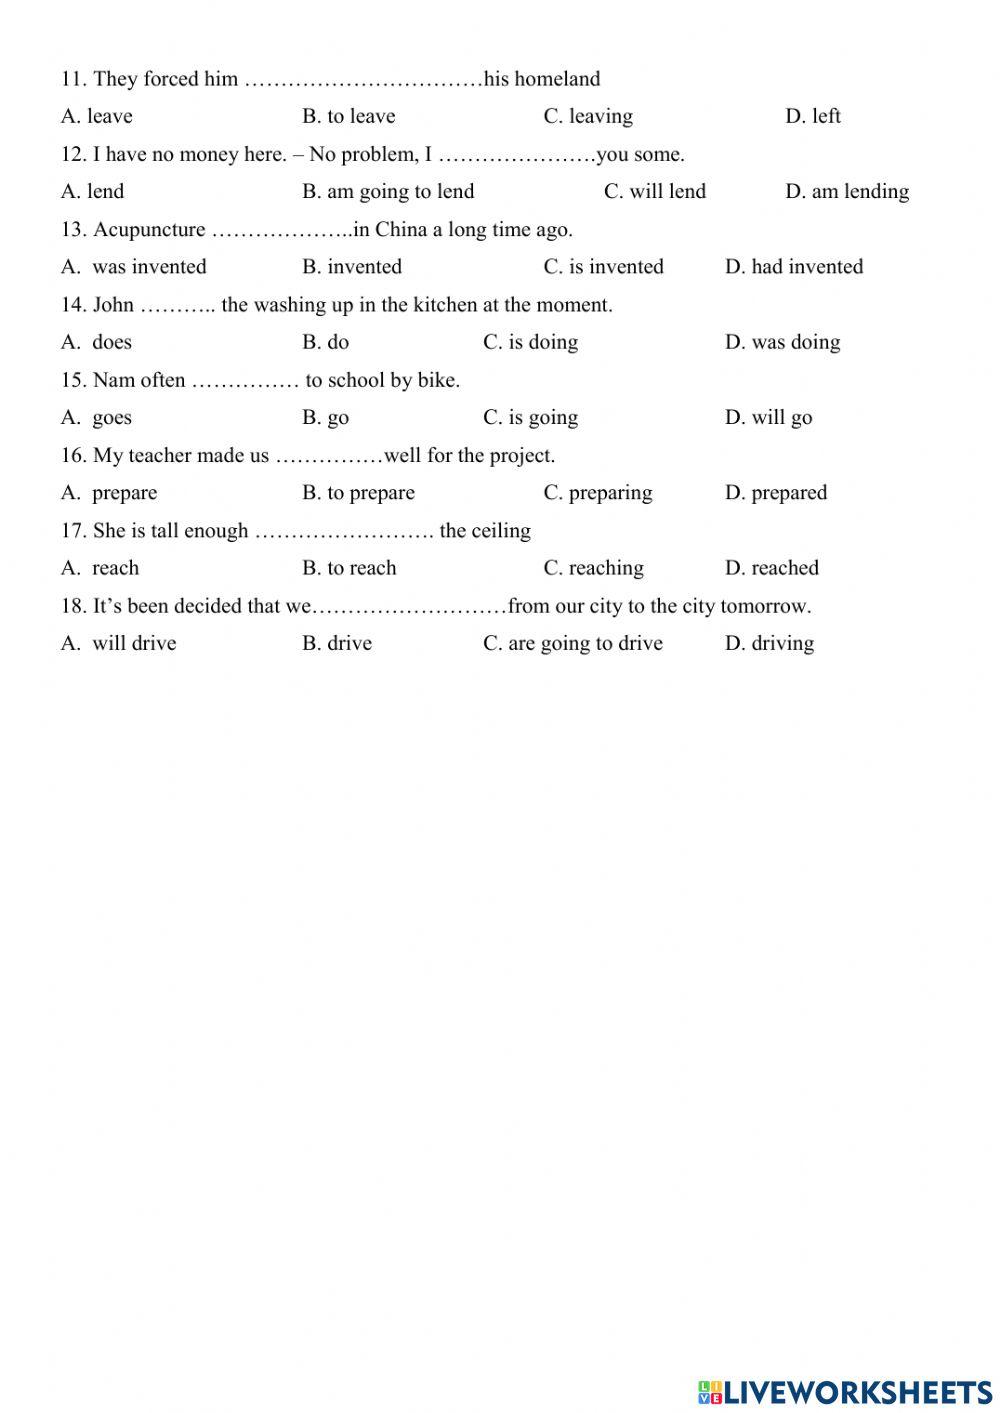 Practice test MID TERM ENGLISH 10 PART 1